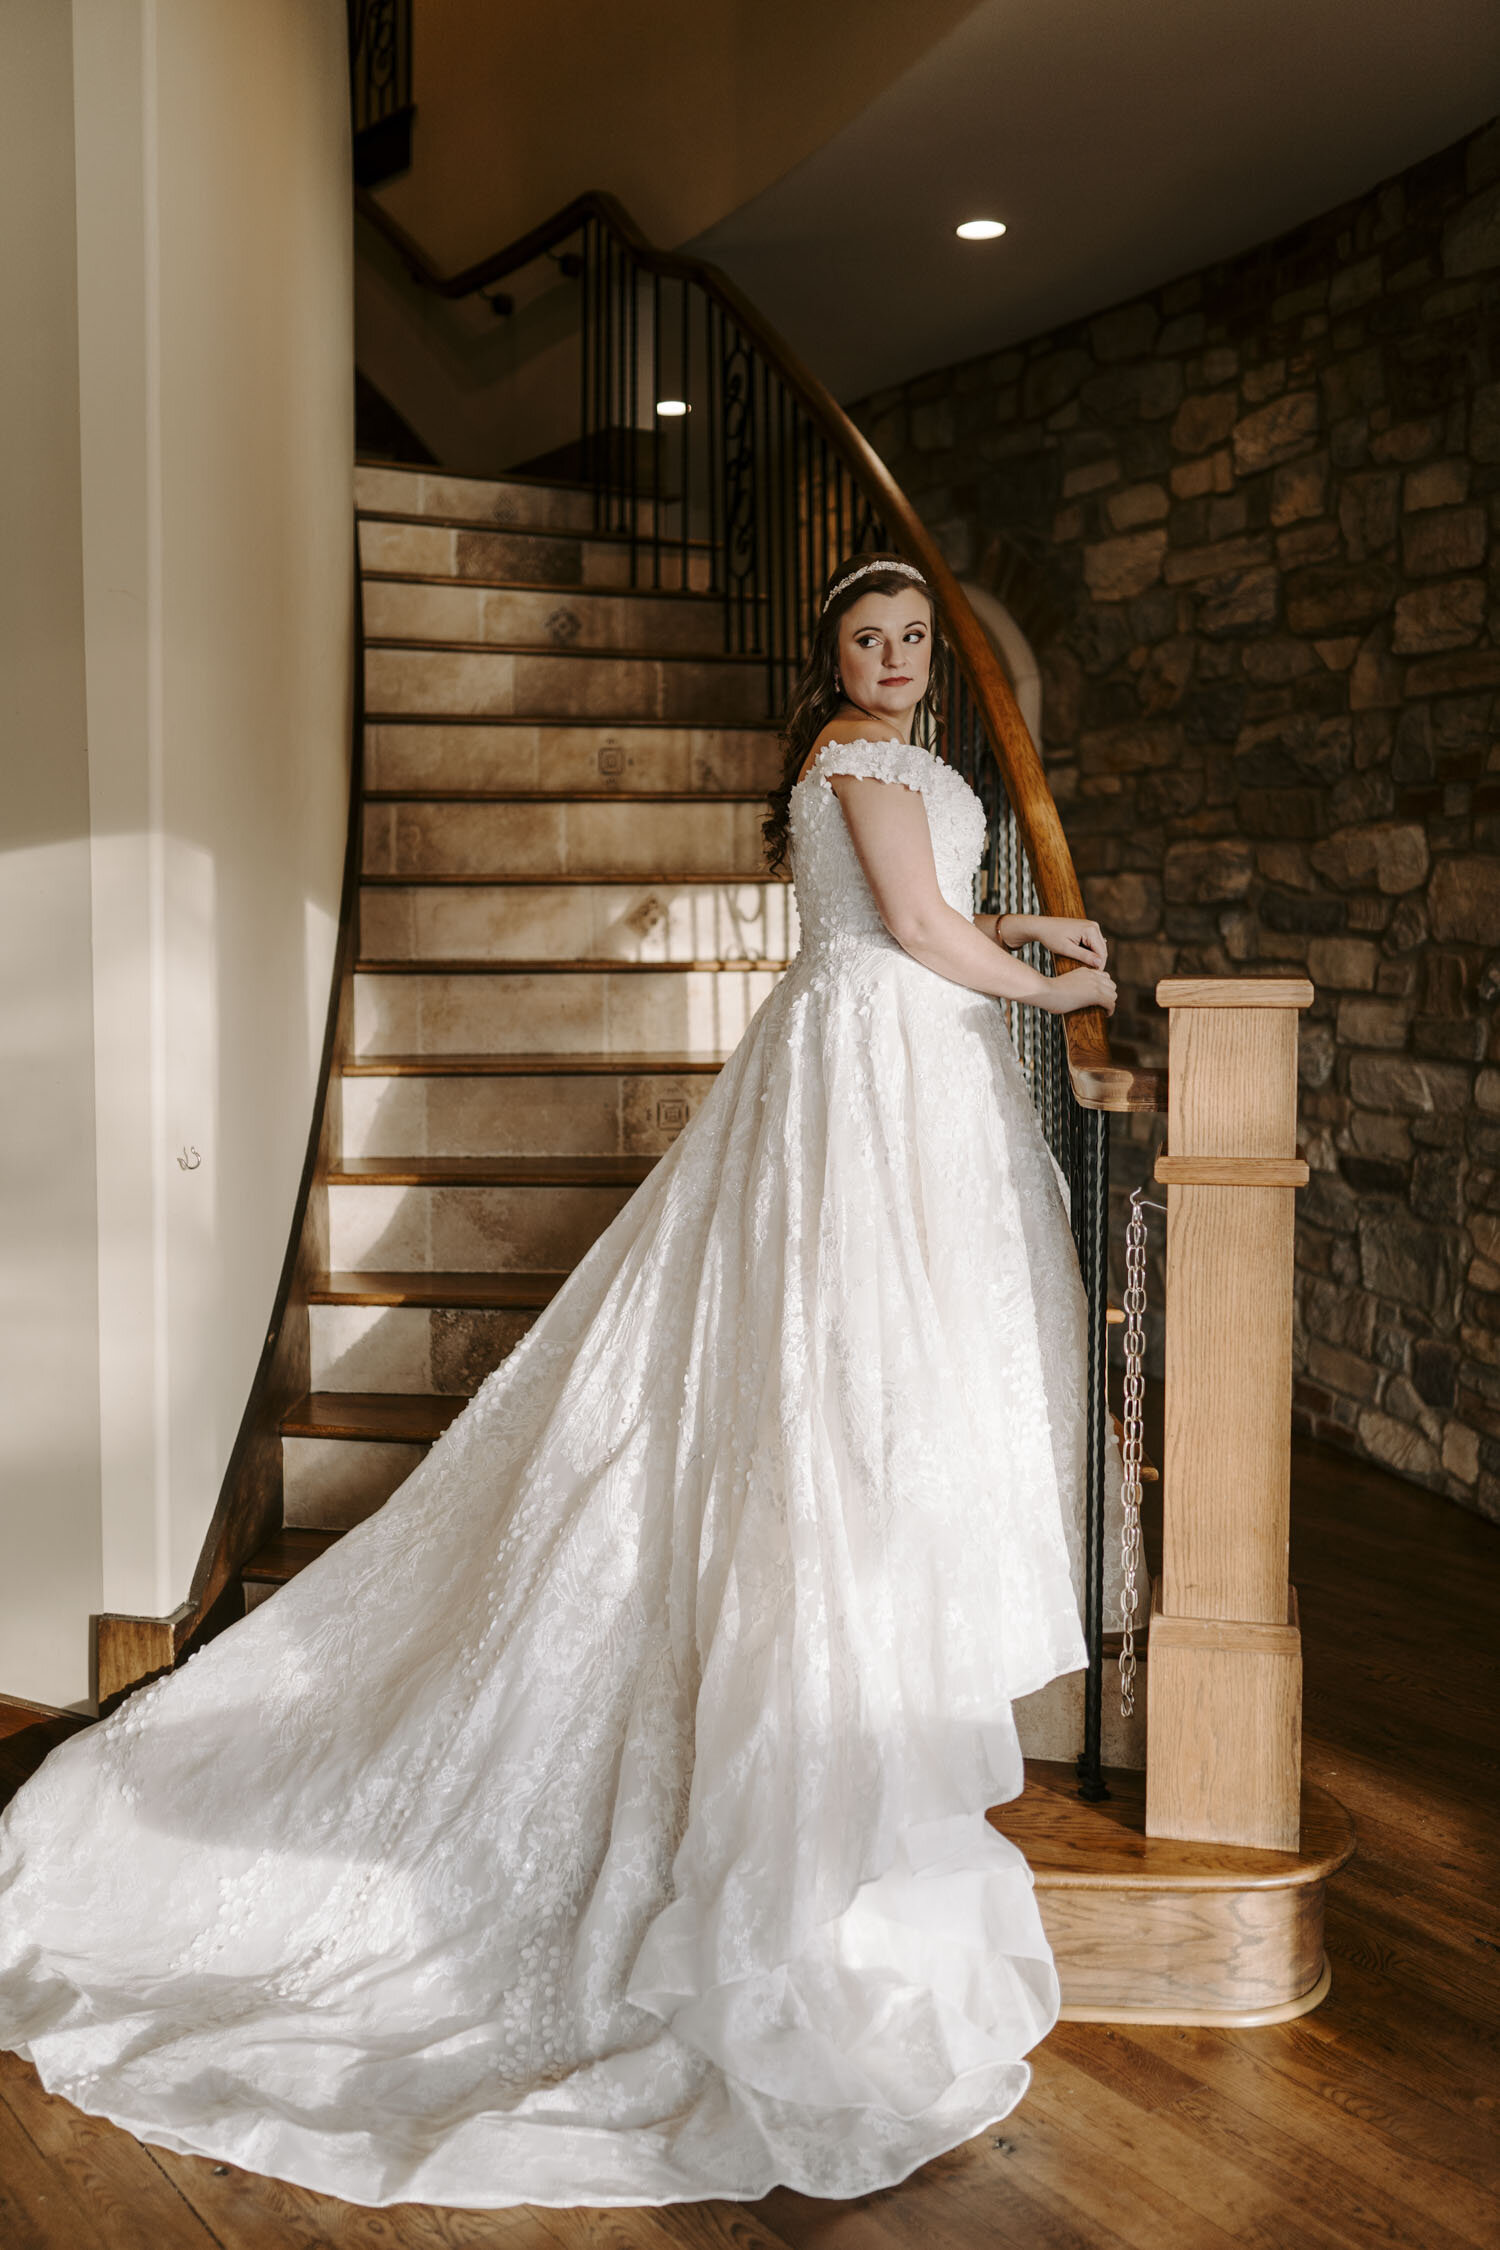 Greensboro Winston-Salem NC Bridal Session by North Carolina based Intimate Wedding & Elopement Photographer